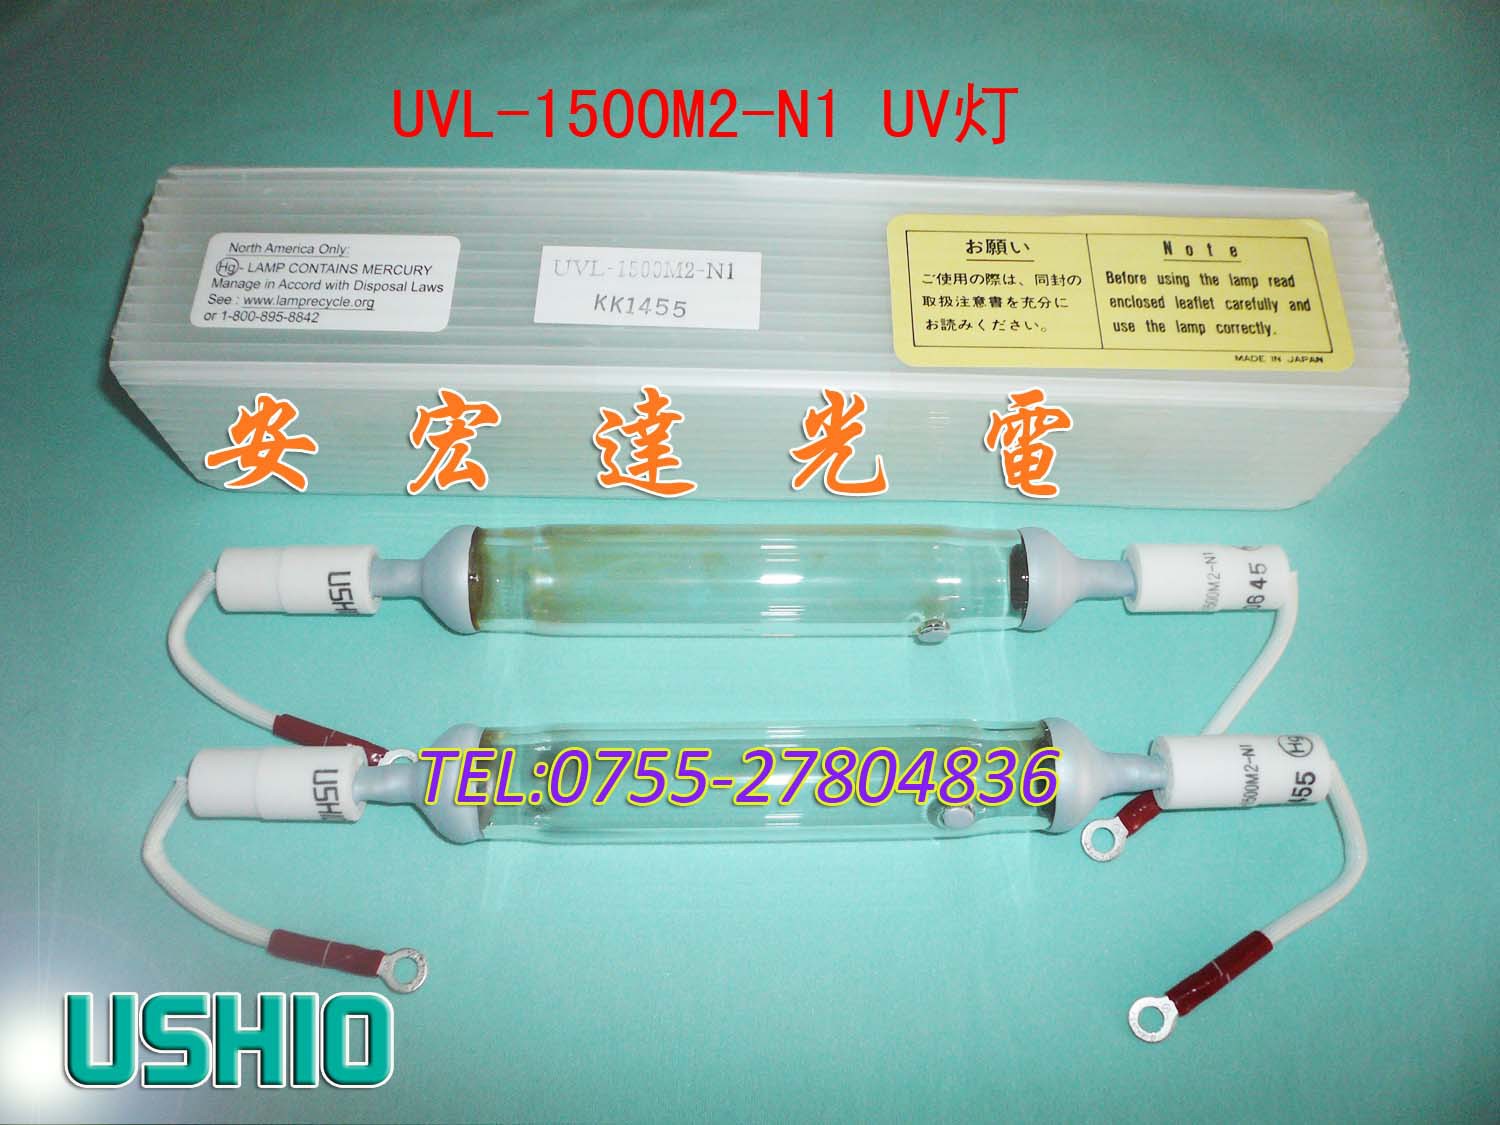 USHIO UVL-1500M2-N1 UV灯--01